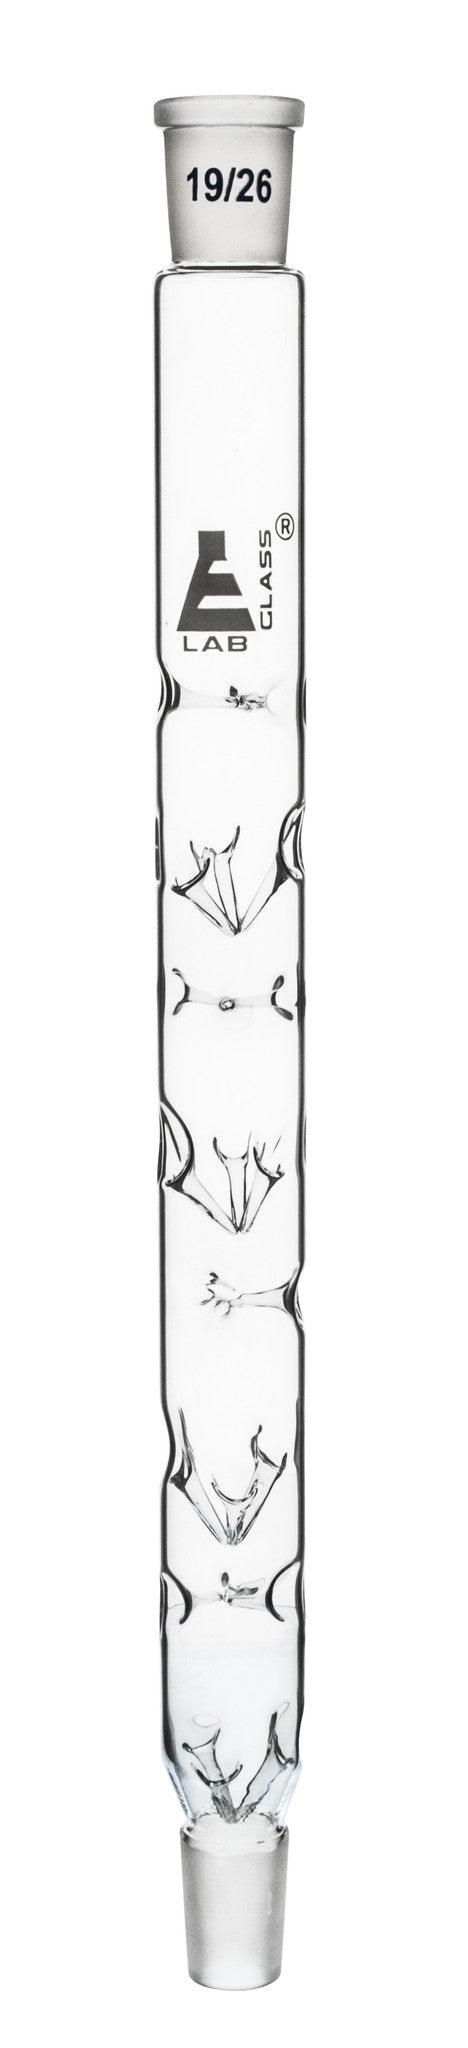 Vigrex Fractioning Column, Socket 29/32, Cone 29/32, Length 360 mm